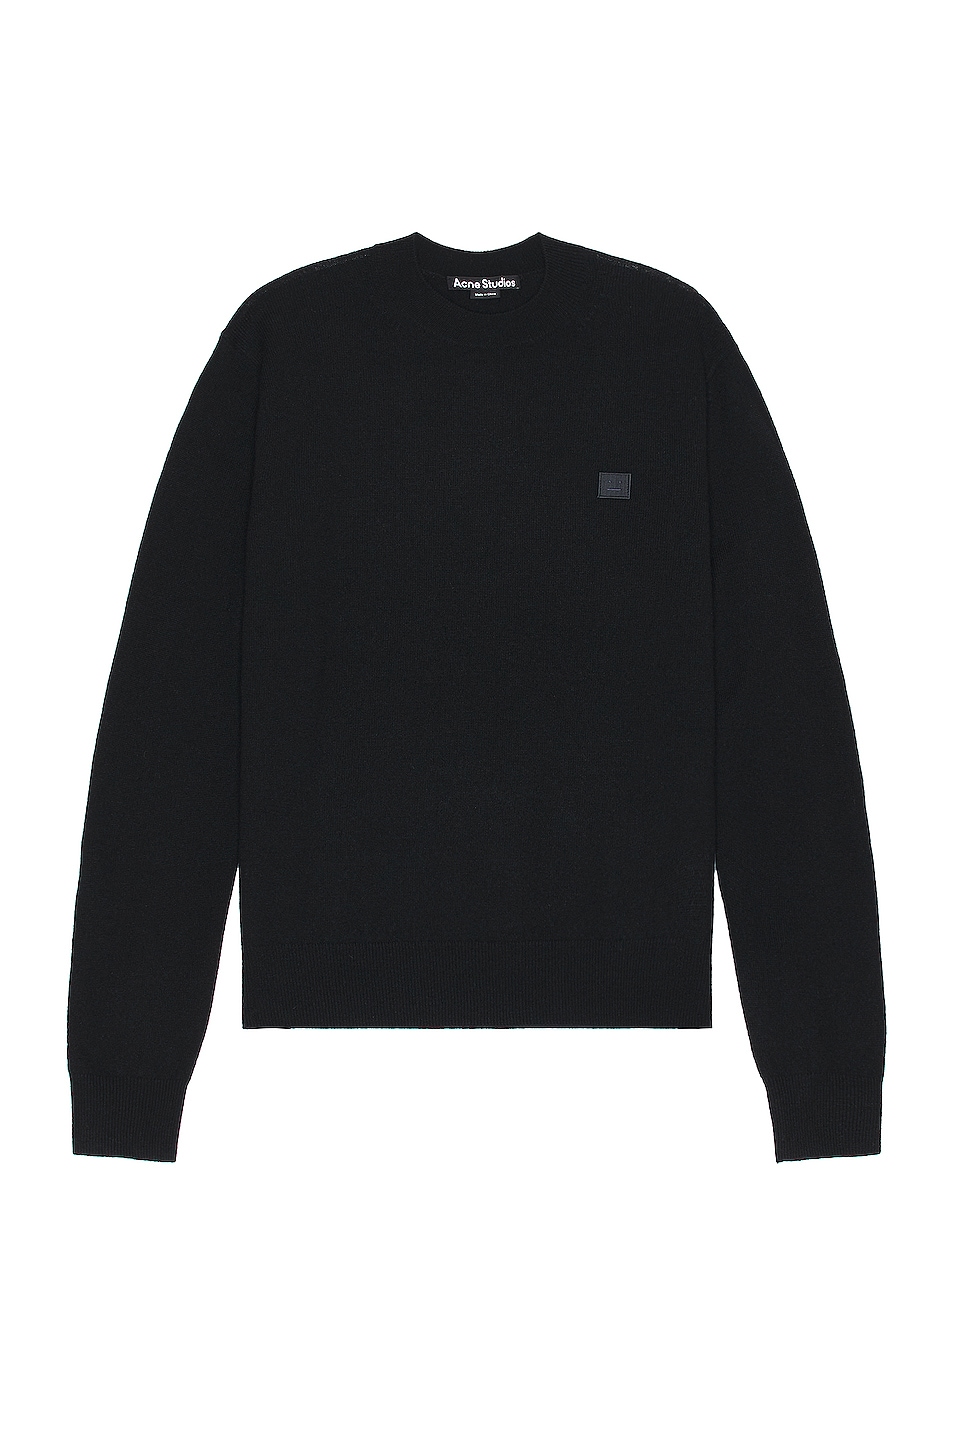 Acne Studios Face Sweater in Black | FWRD